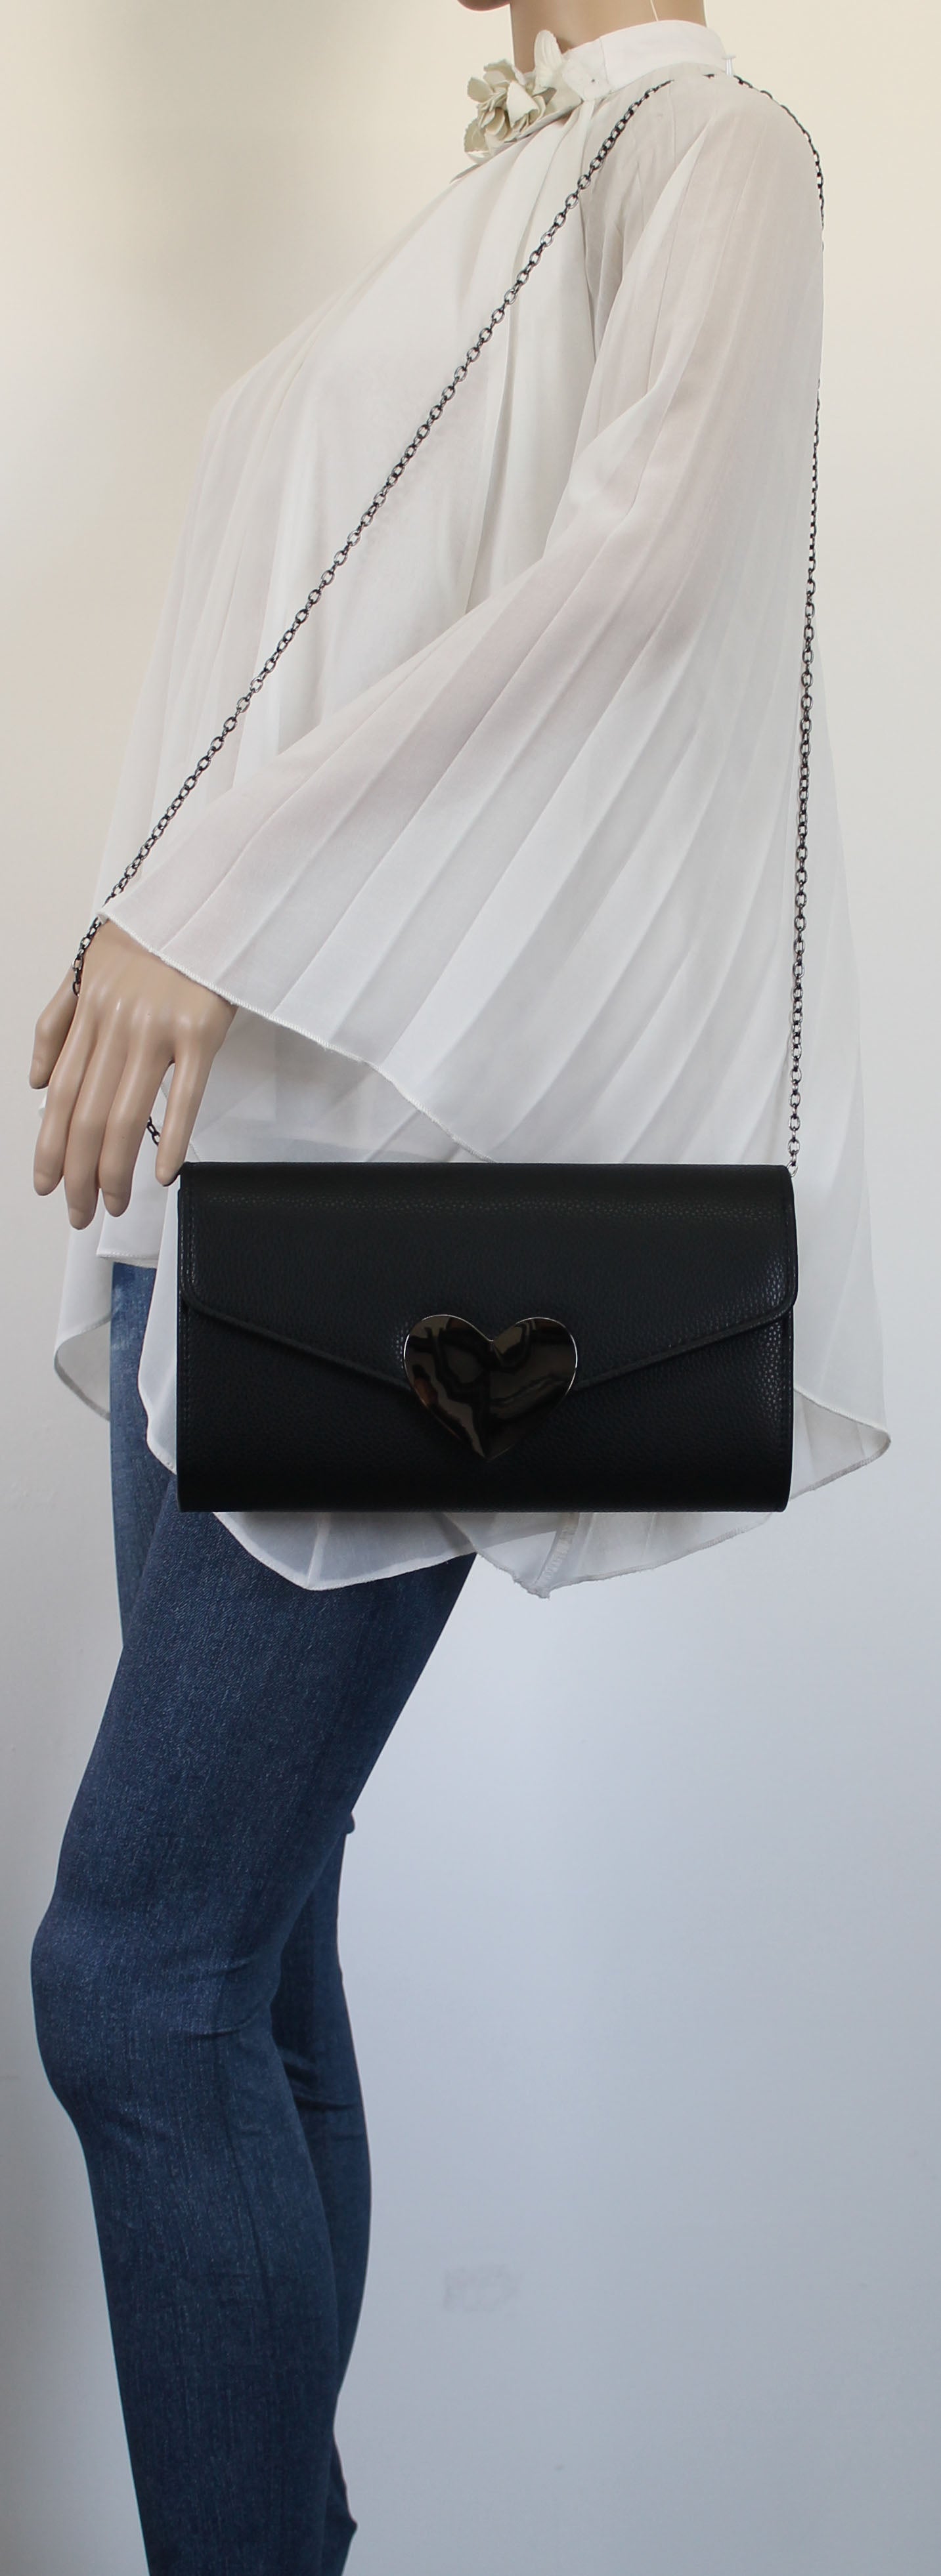 SWANKYSWANS Corrie Heart Clutch Bag Black Cute Cheap Clutch Bag For Weddings School and Work